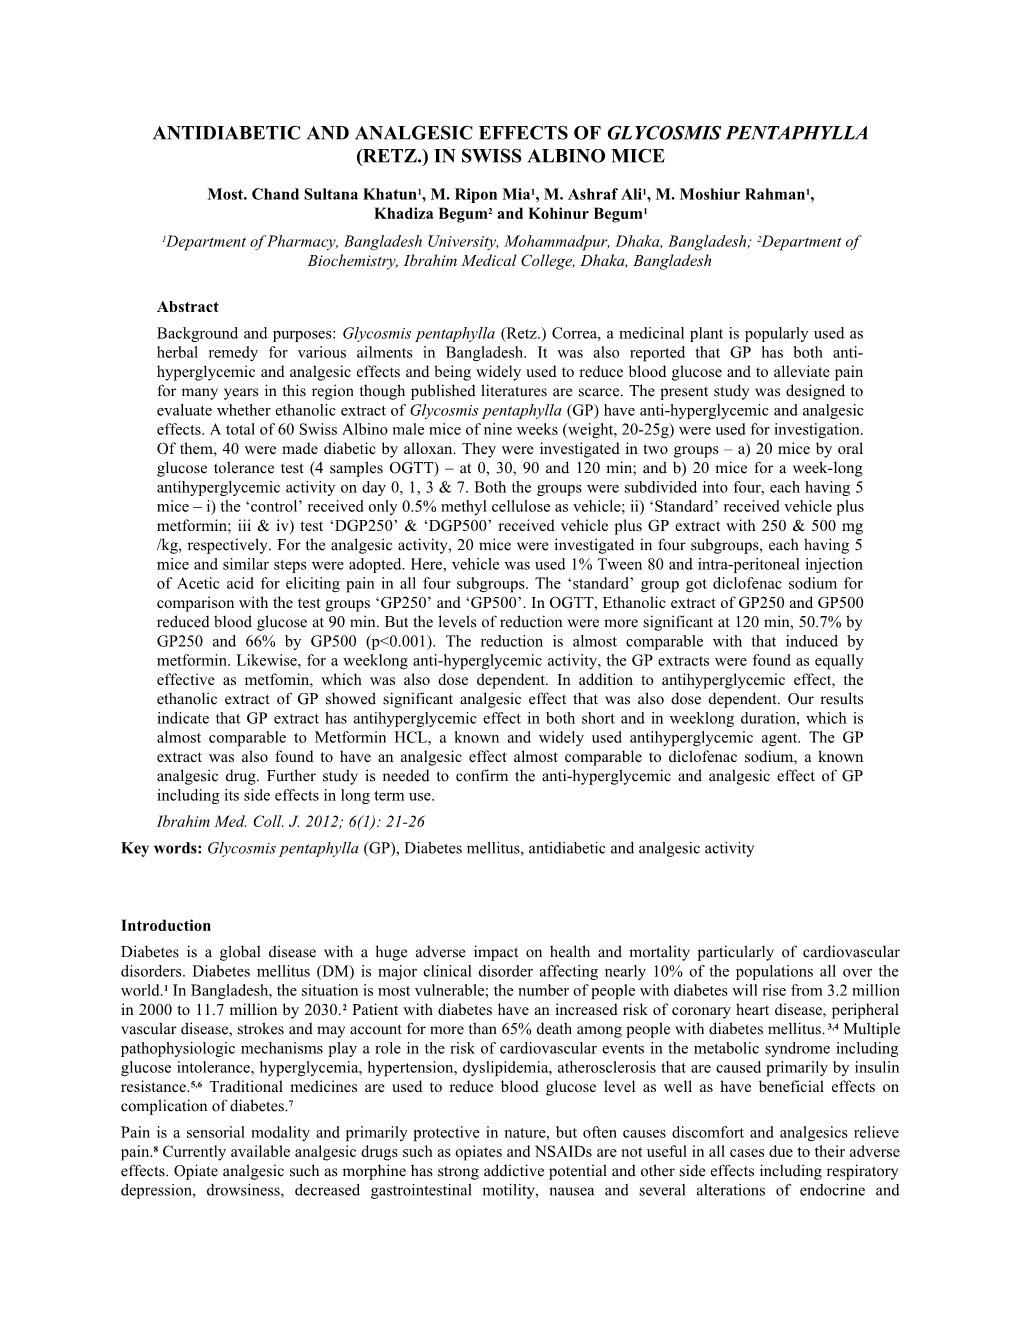 Antidiabetic and Analgesic Effects of Glycosmis Pentaphylla (Retz.) in Swiss Albino Mice